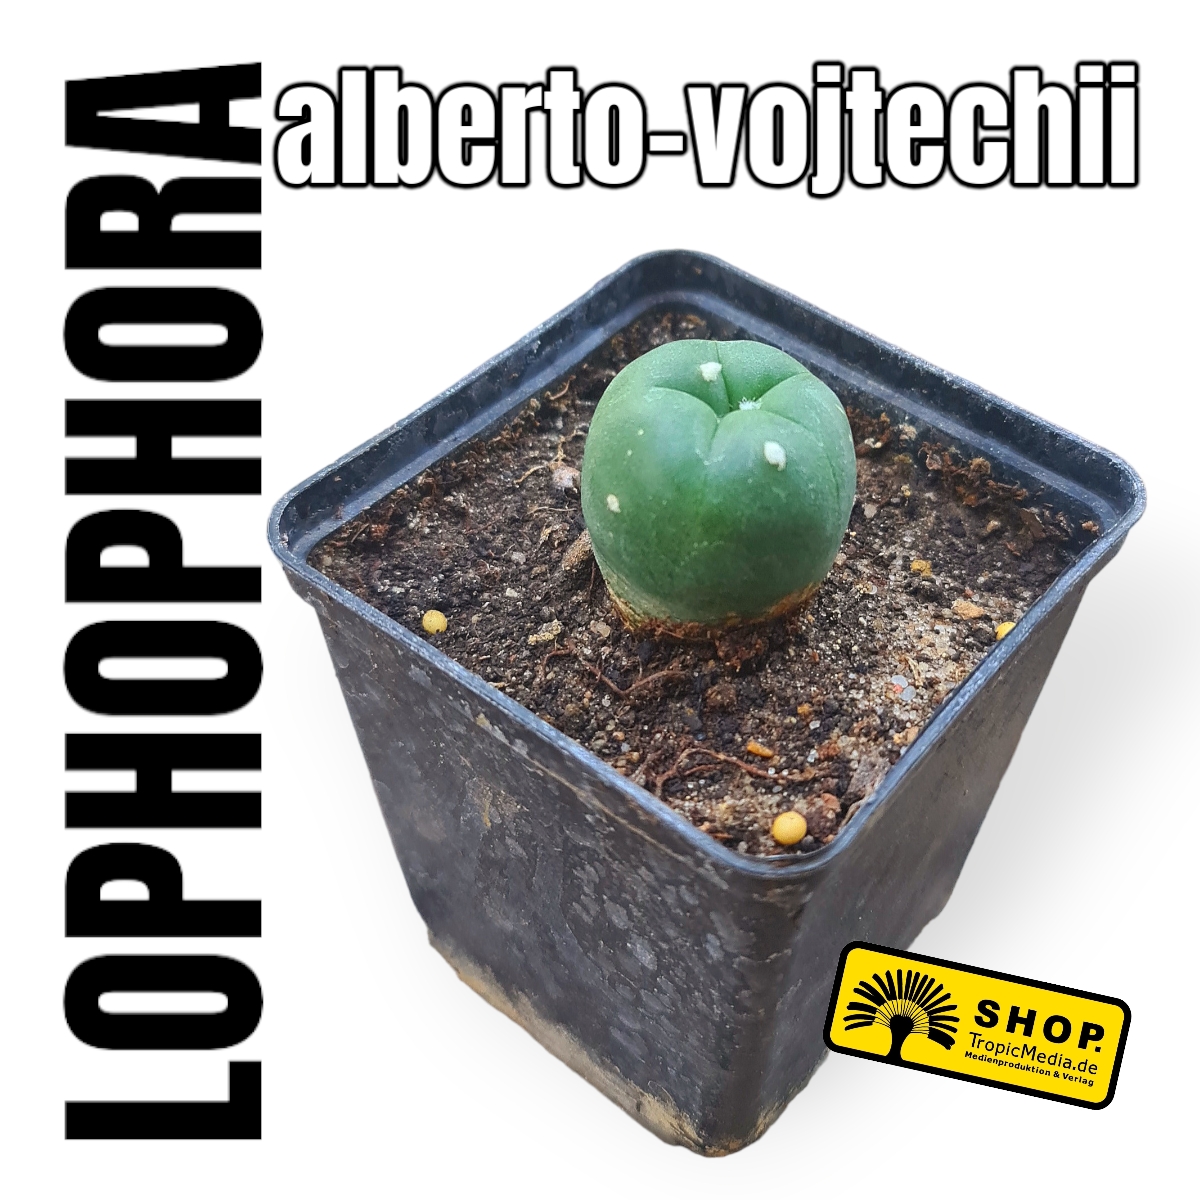 Lophophora alberto-voitechii